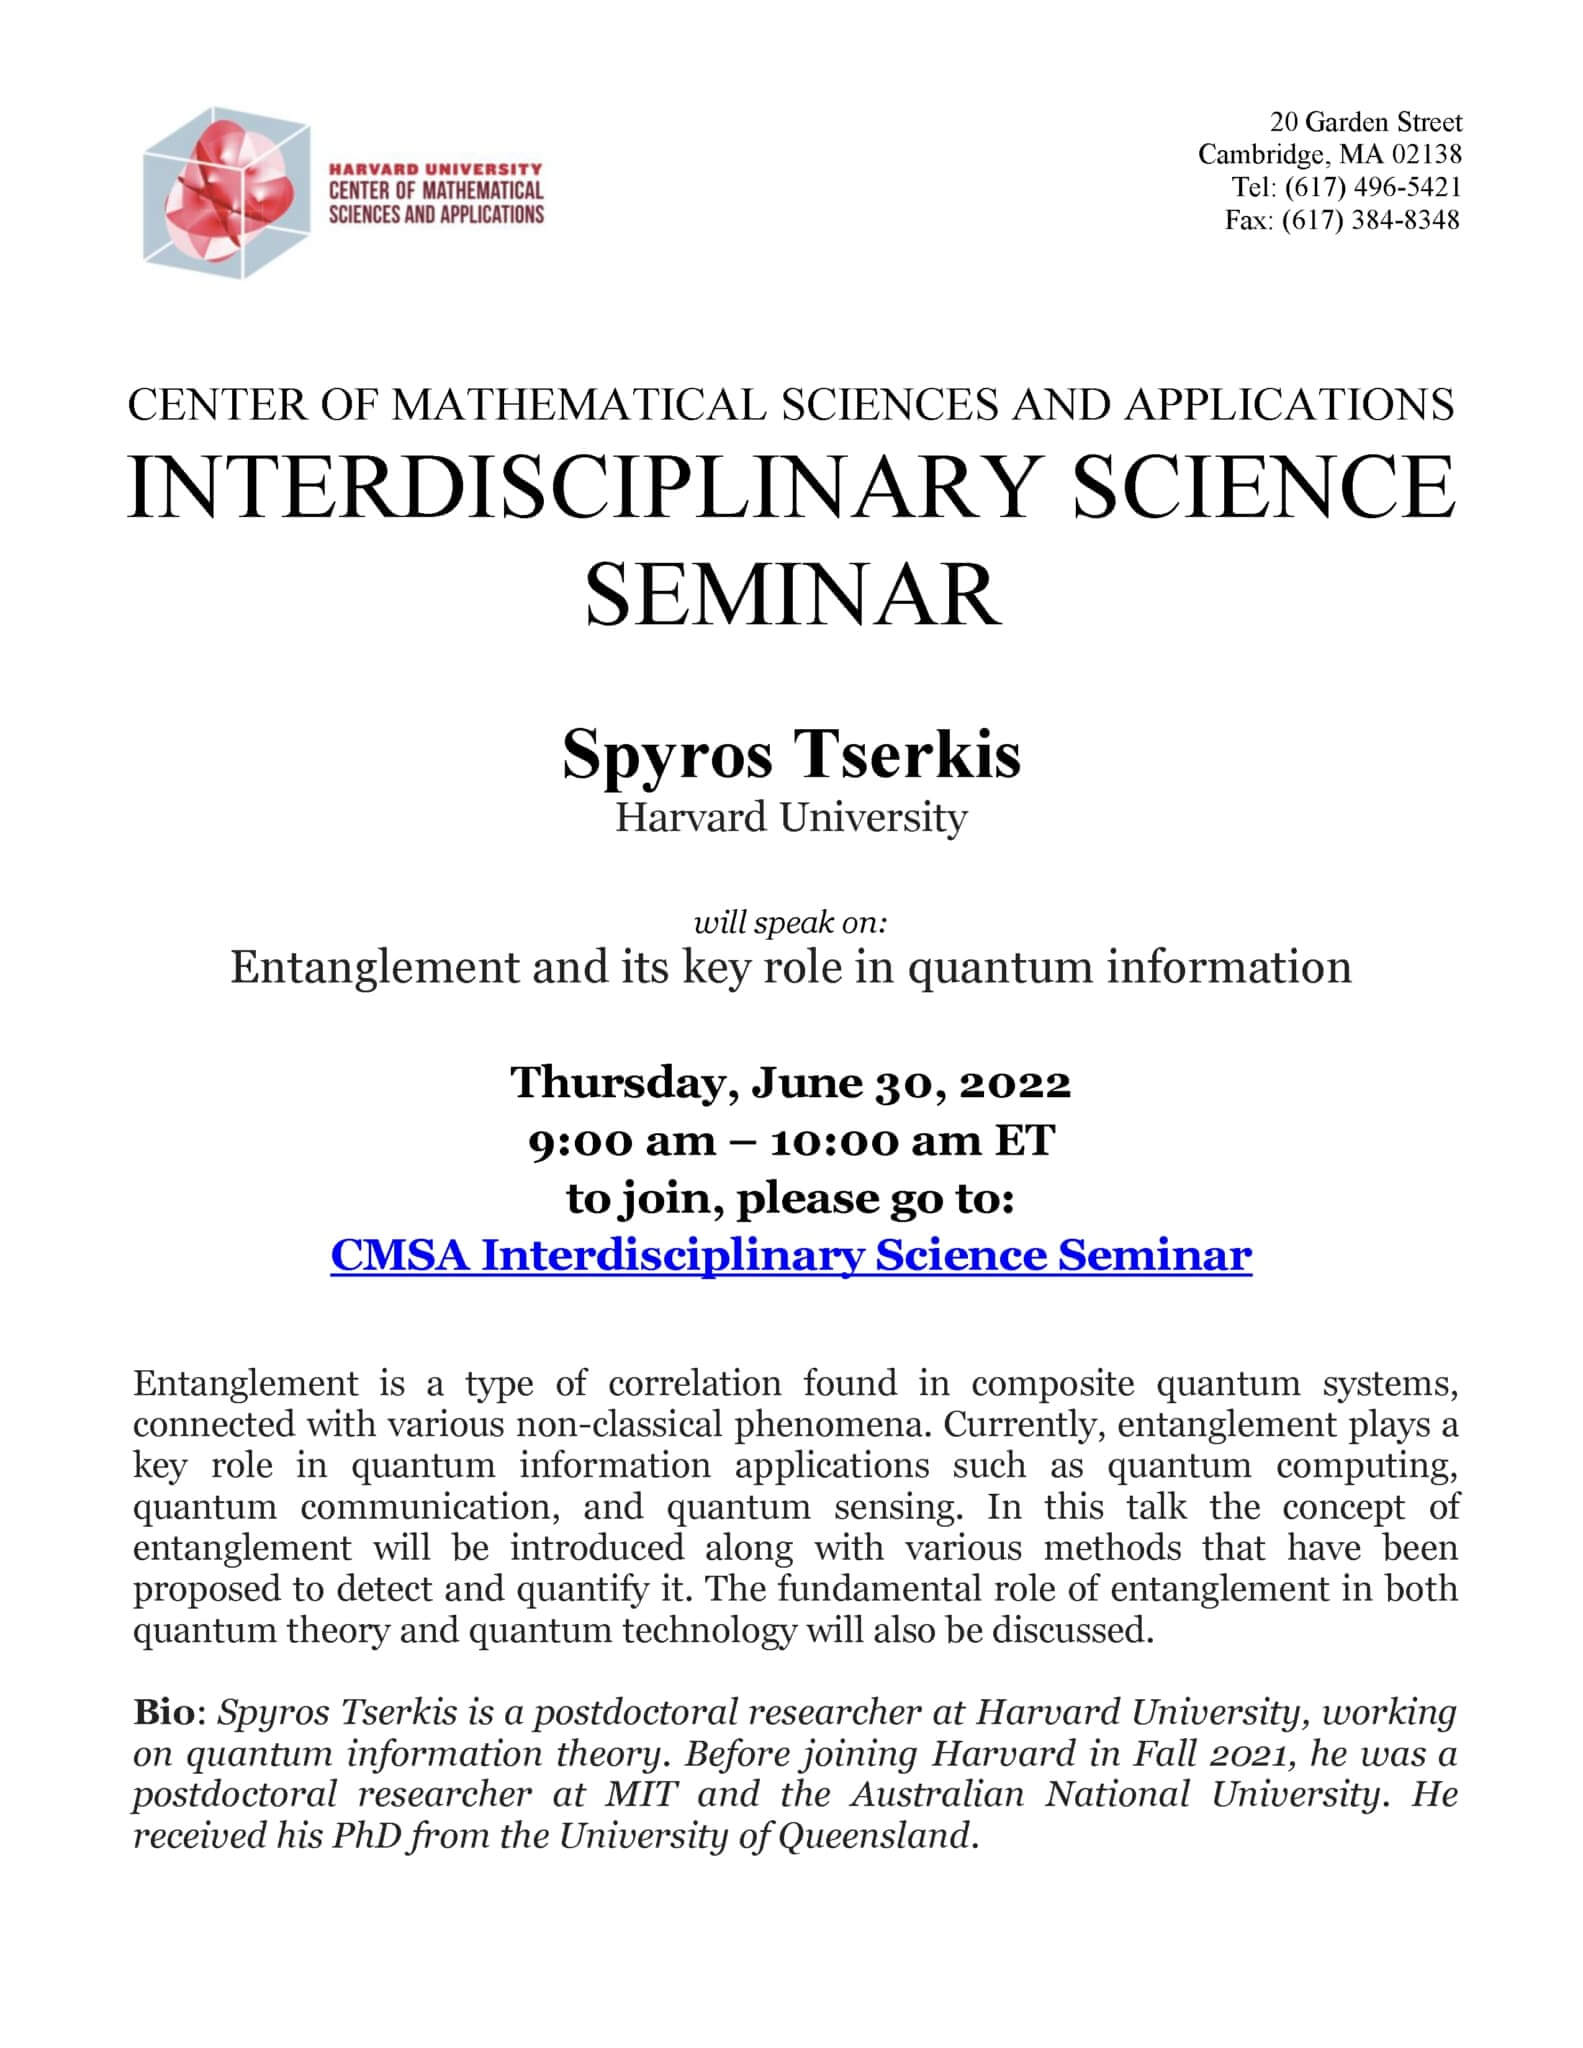 CMSA-Interdisciplinary-Science-Seminar-06.30.22-1583x2048-1